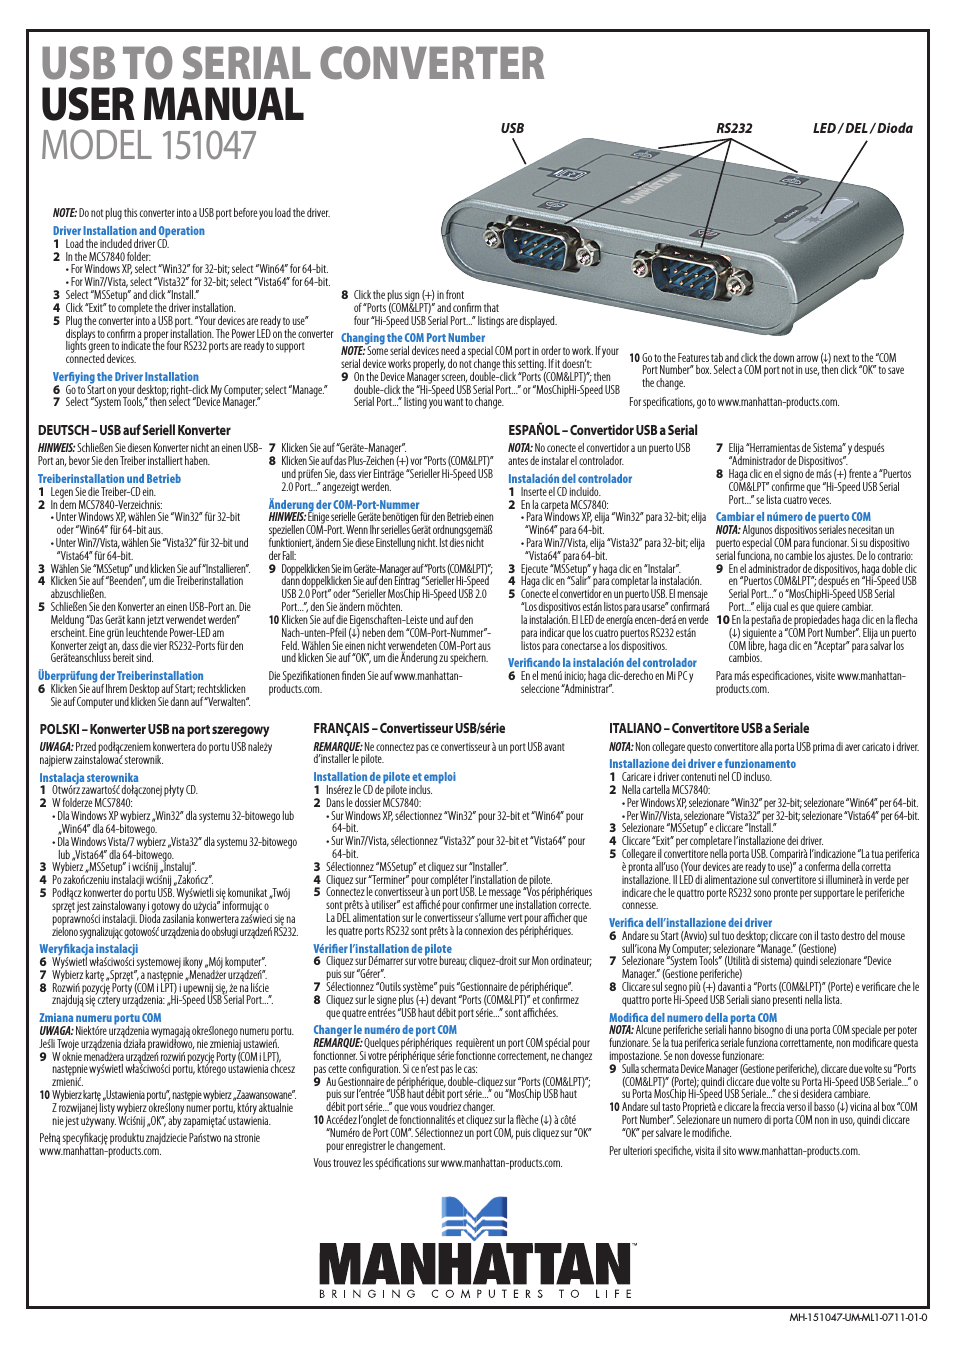 151047 USB to Serial Converter - Manual (Multi)